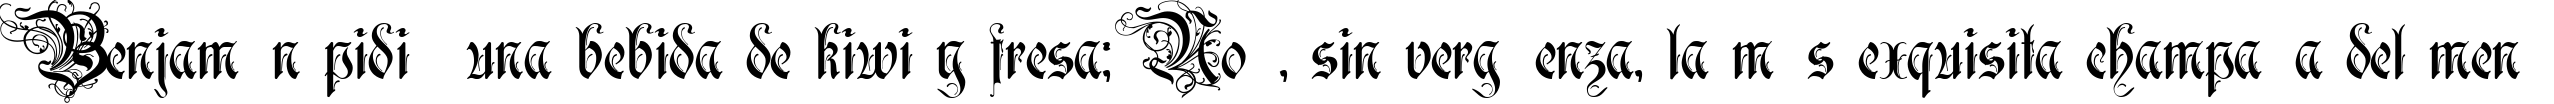 Пример написания шрифтом Rurintania текста на испанском